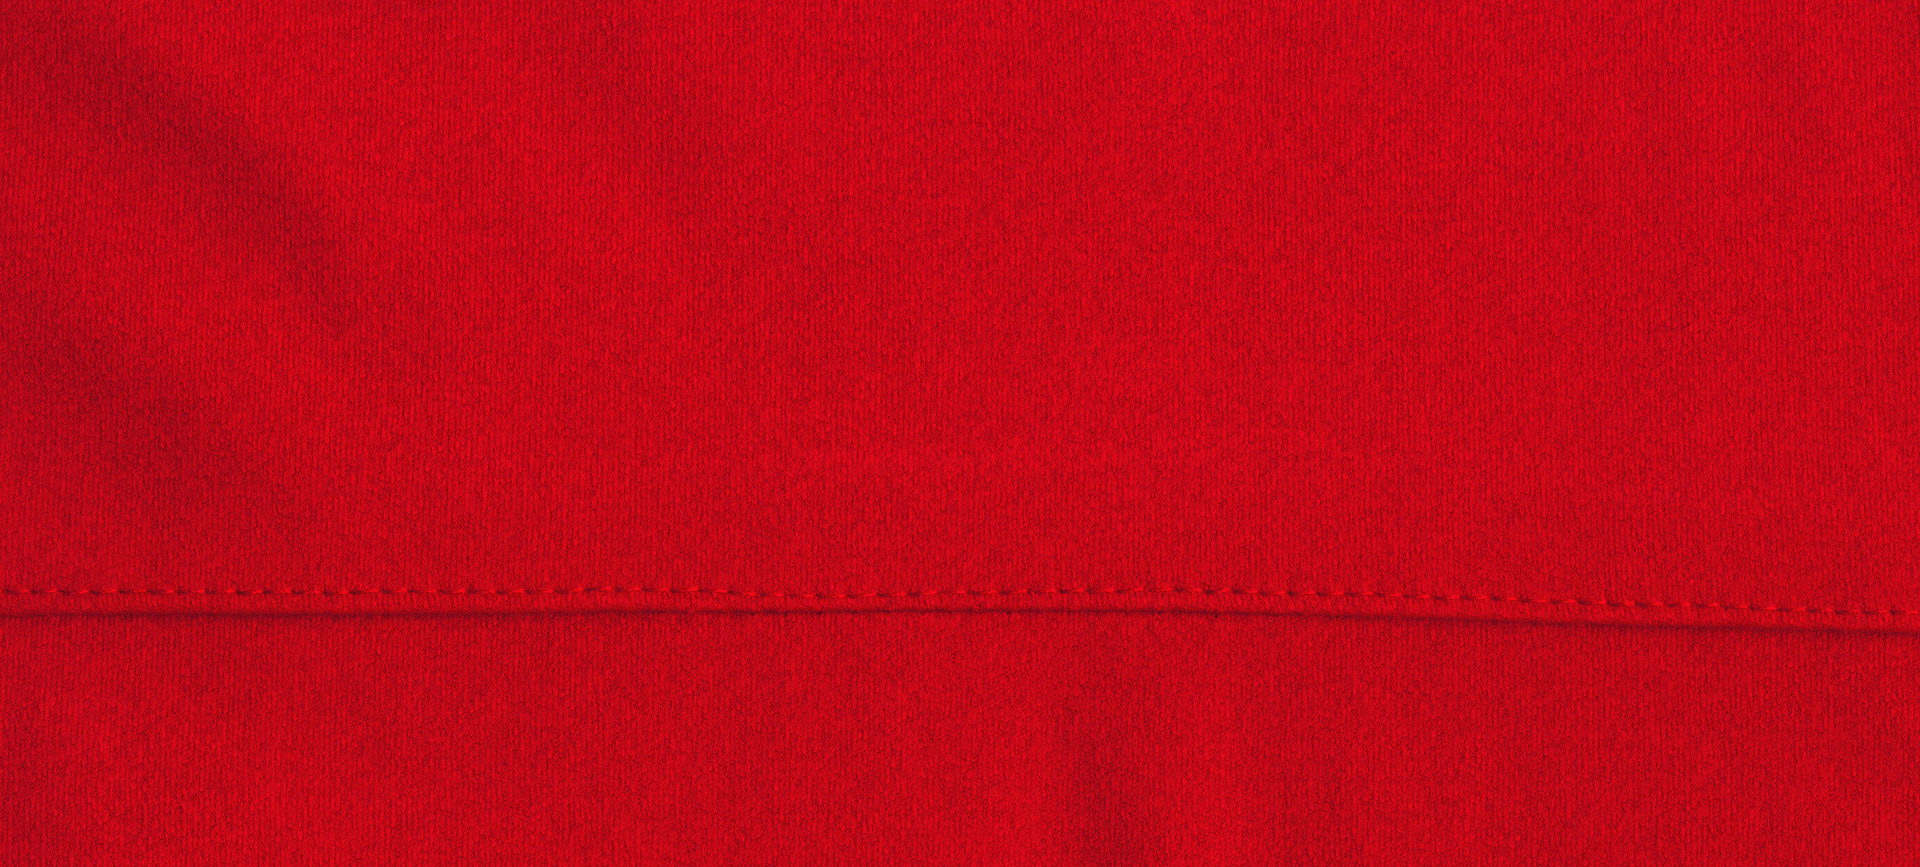 Домен red. Красная ткань. Красная джинсовая ткань. Красное полотно. Красная ткань смесовая.